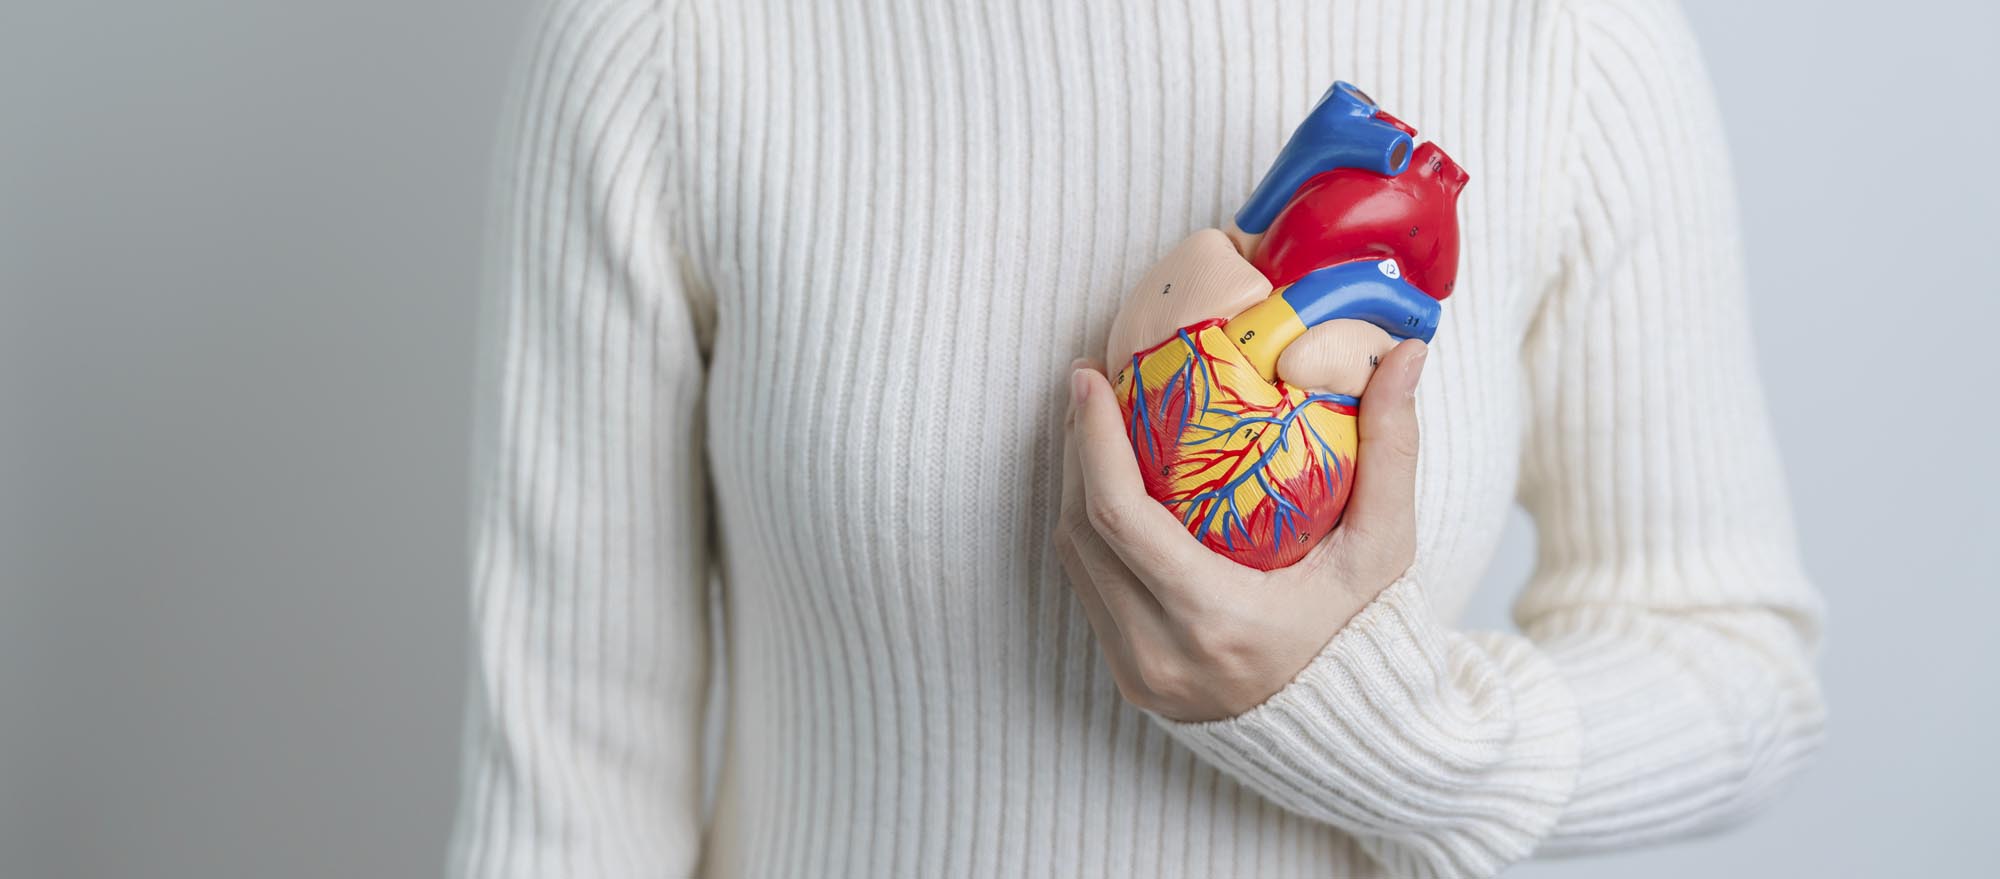 Heart Condition Management